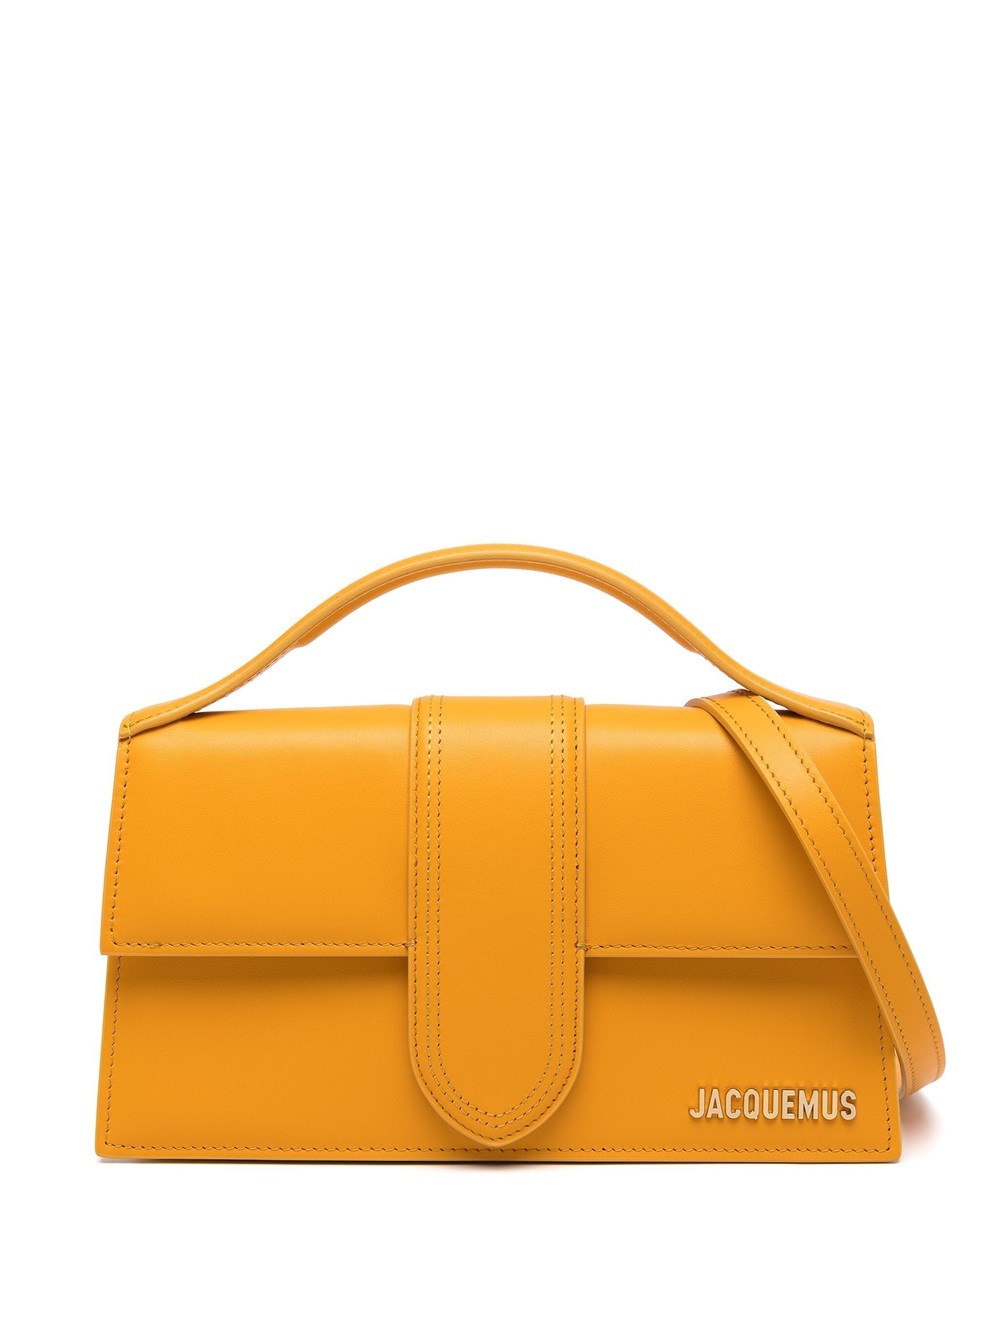 Jacquemus Le Grand Child Tote Bag In Yellow & Orange